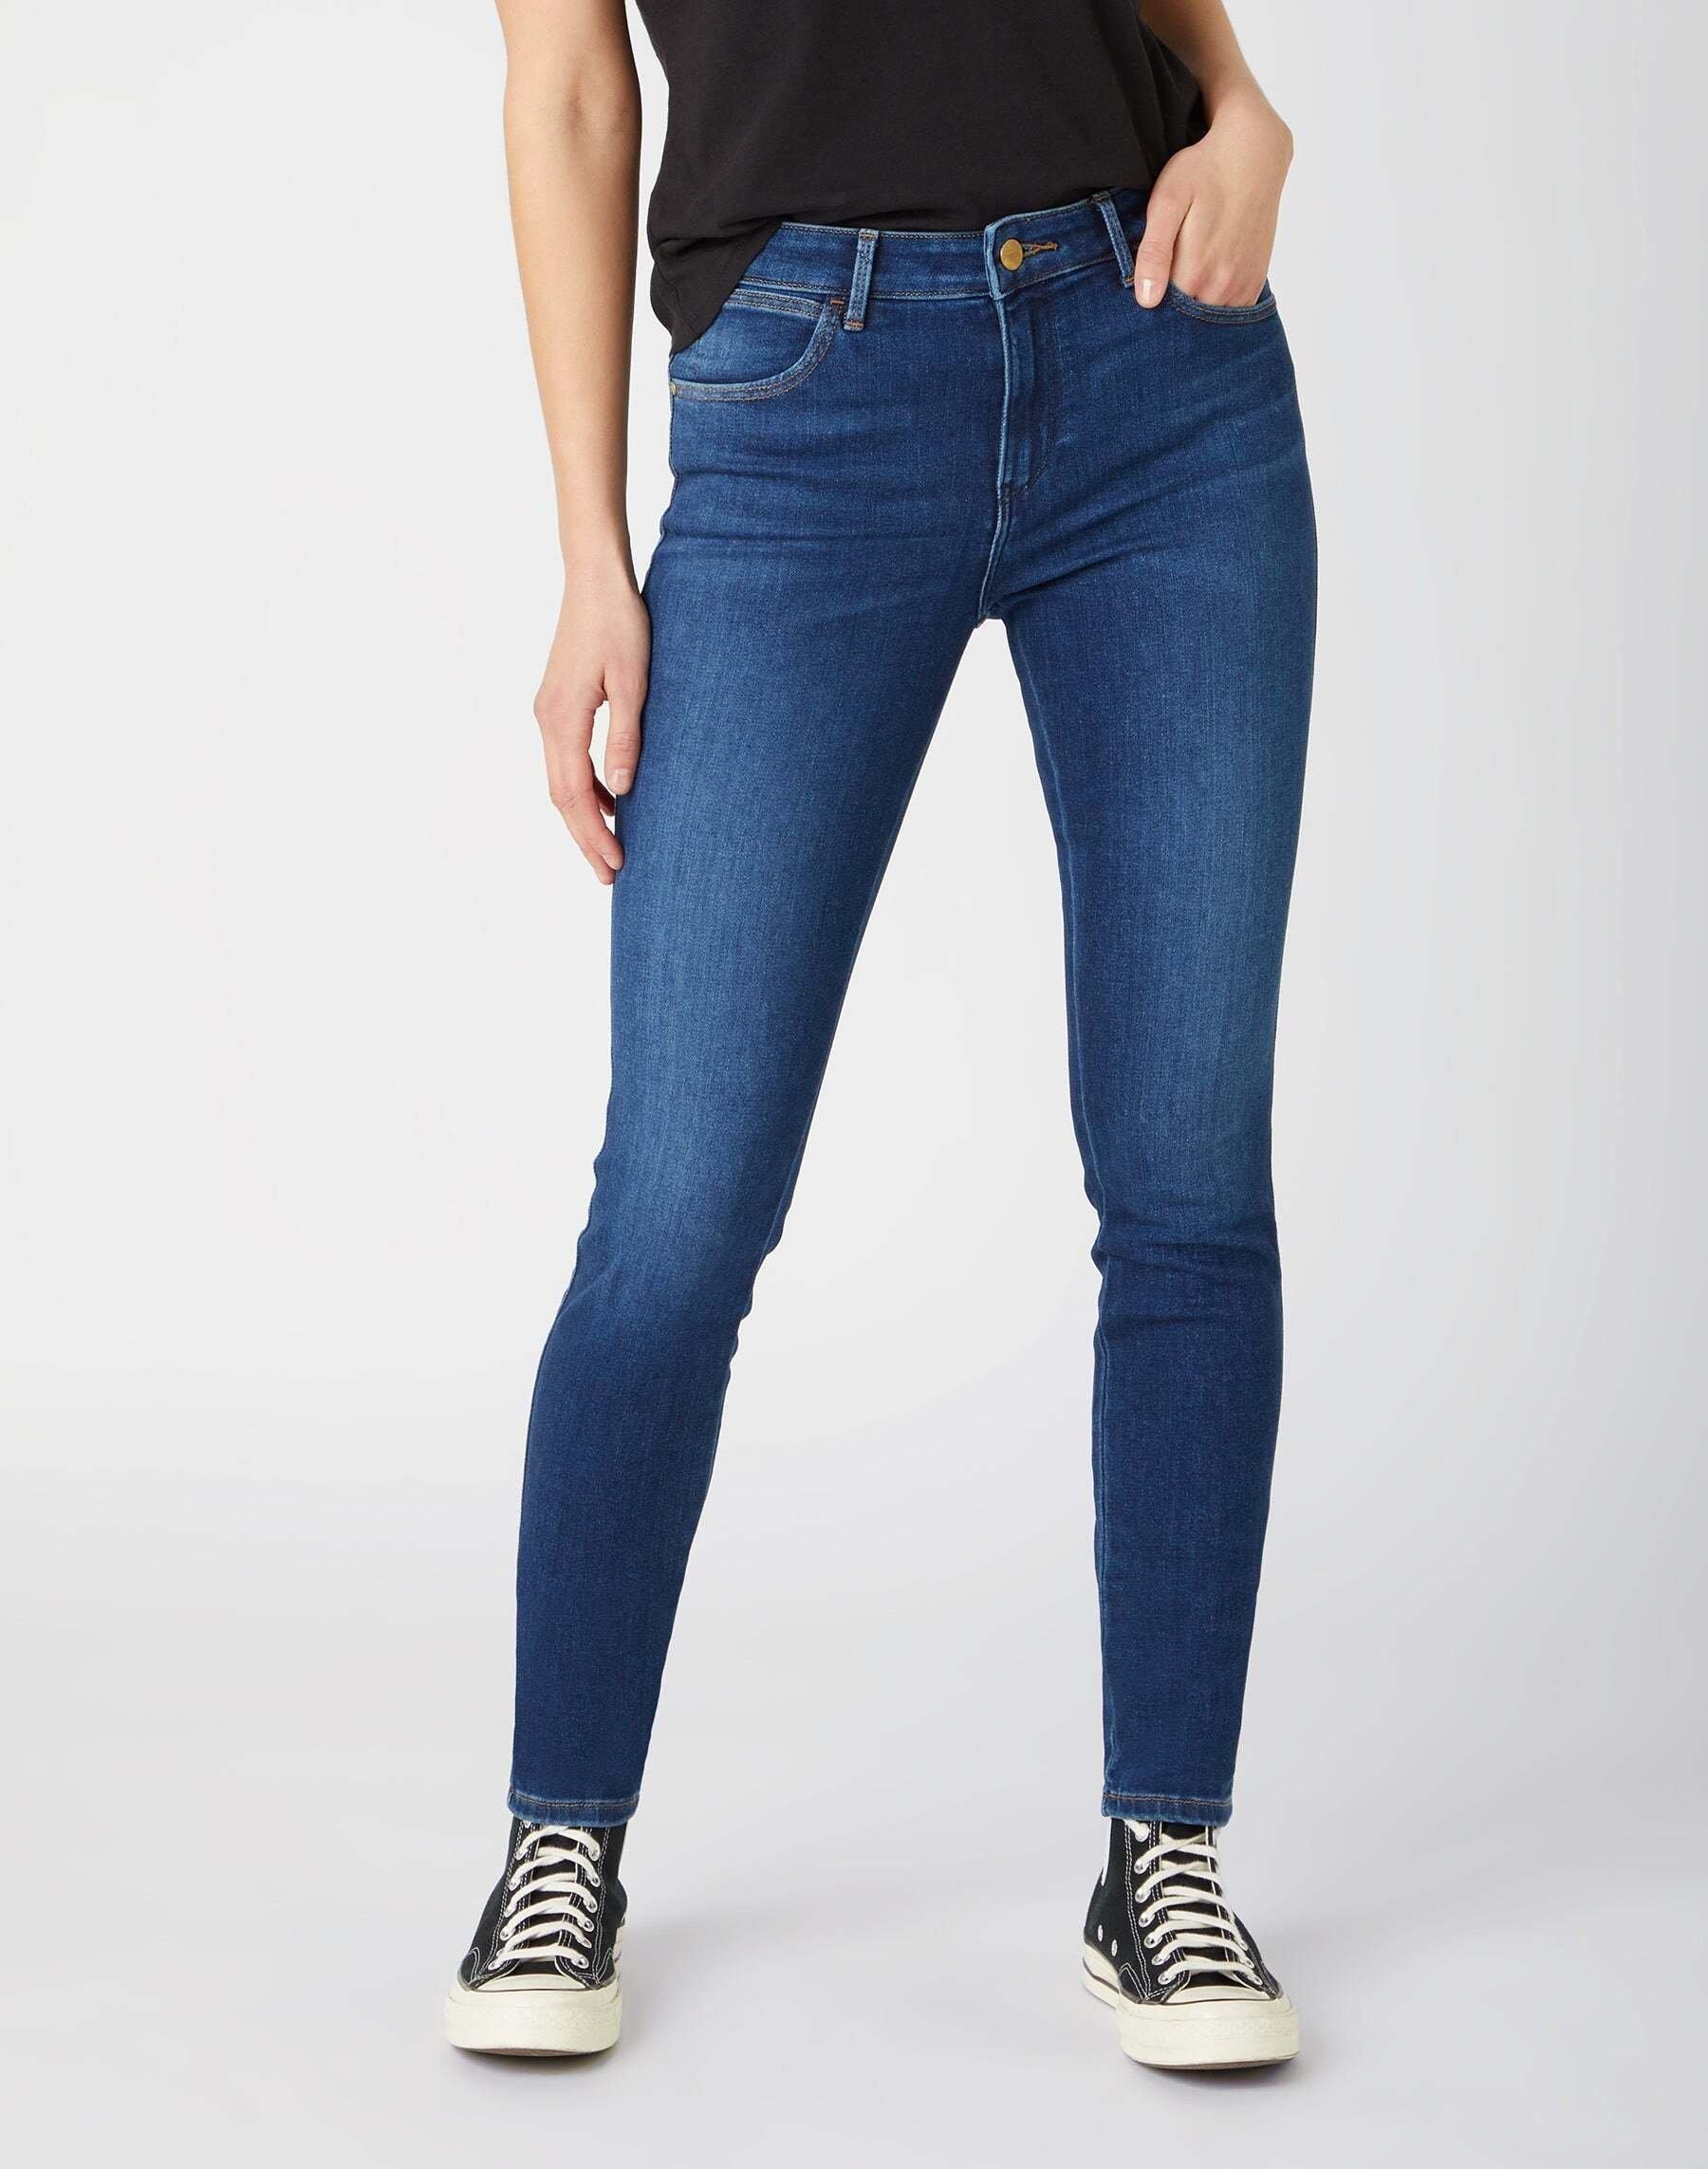 Jeans Skinny Fit Skinny Damen Blau Denim L34/W28 von Wrangler